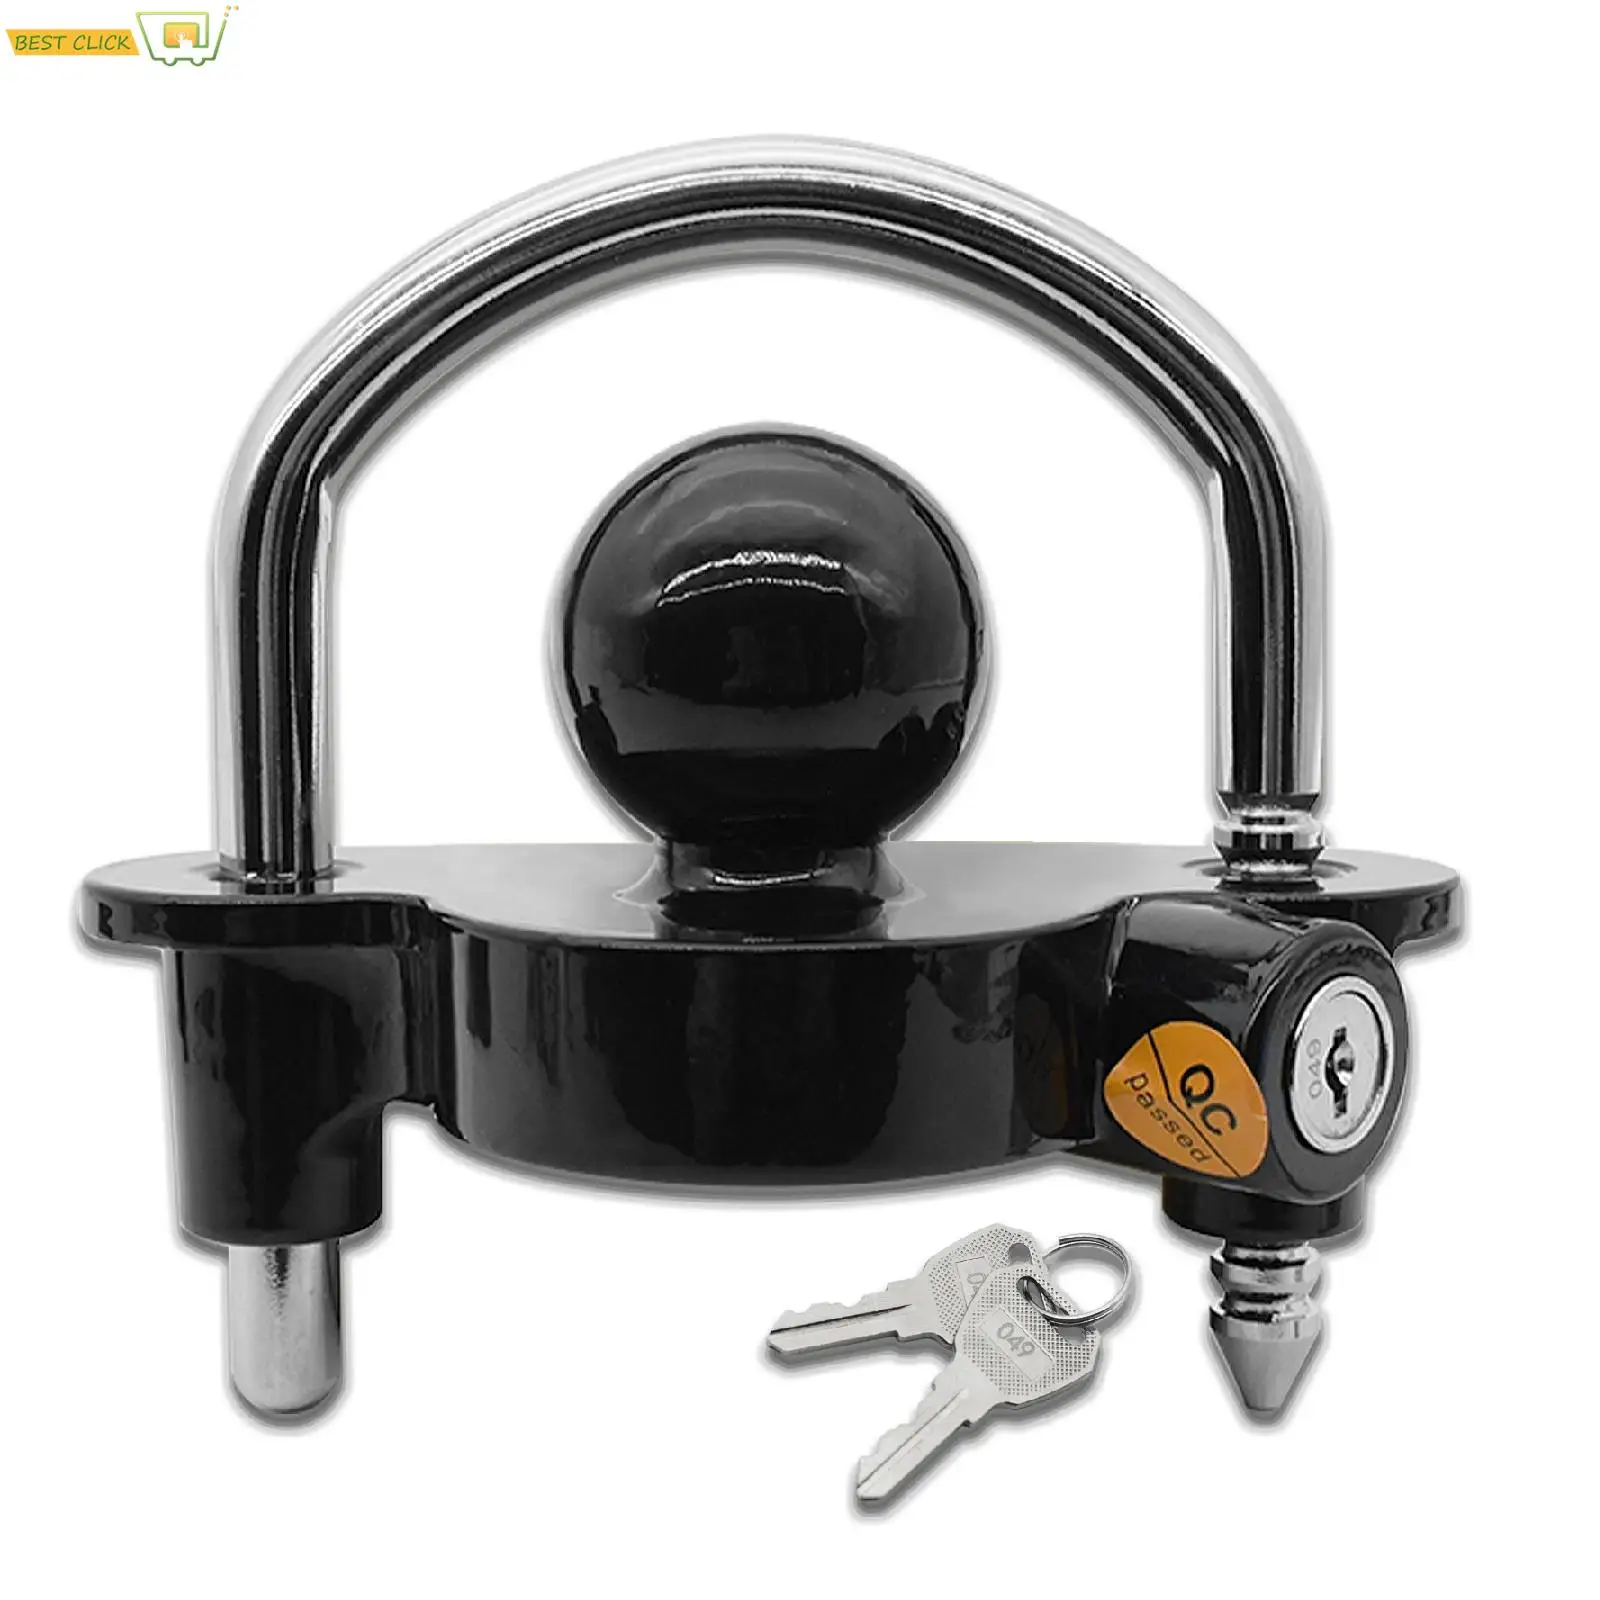 Heavy-Duty Hook Lock Universal Caravan Accessories Trailer Ball Coupler Trailer Lock Anti-Theft Lock Auto Parts